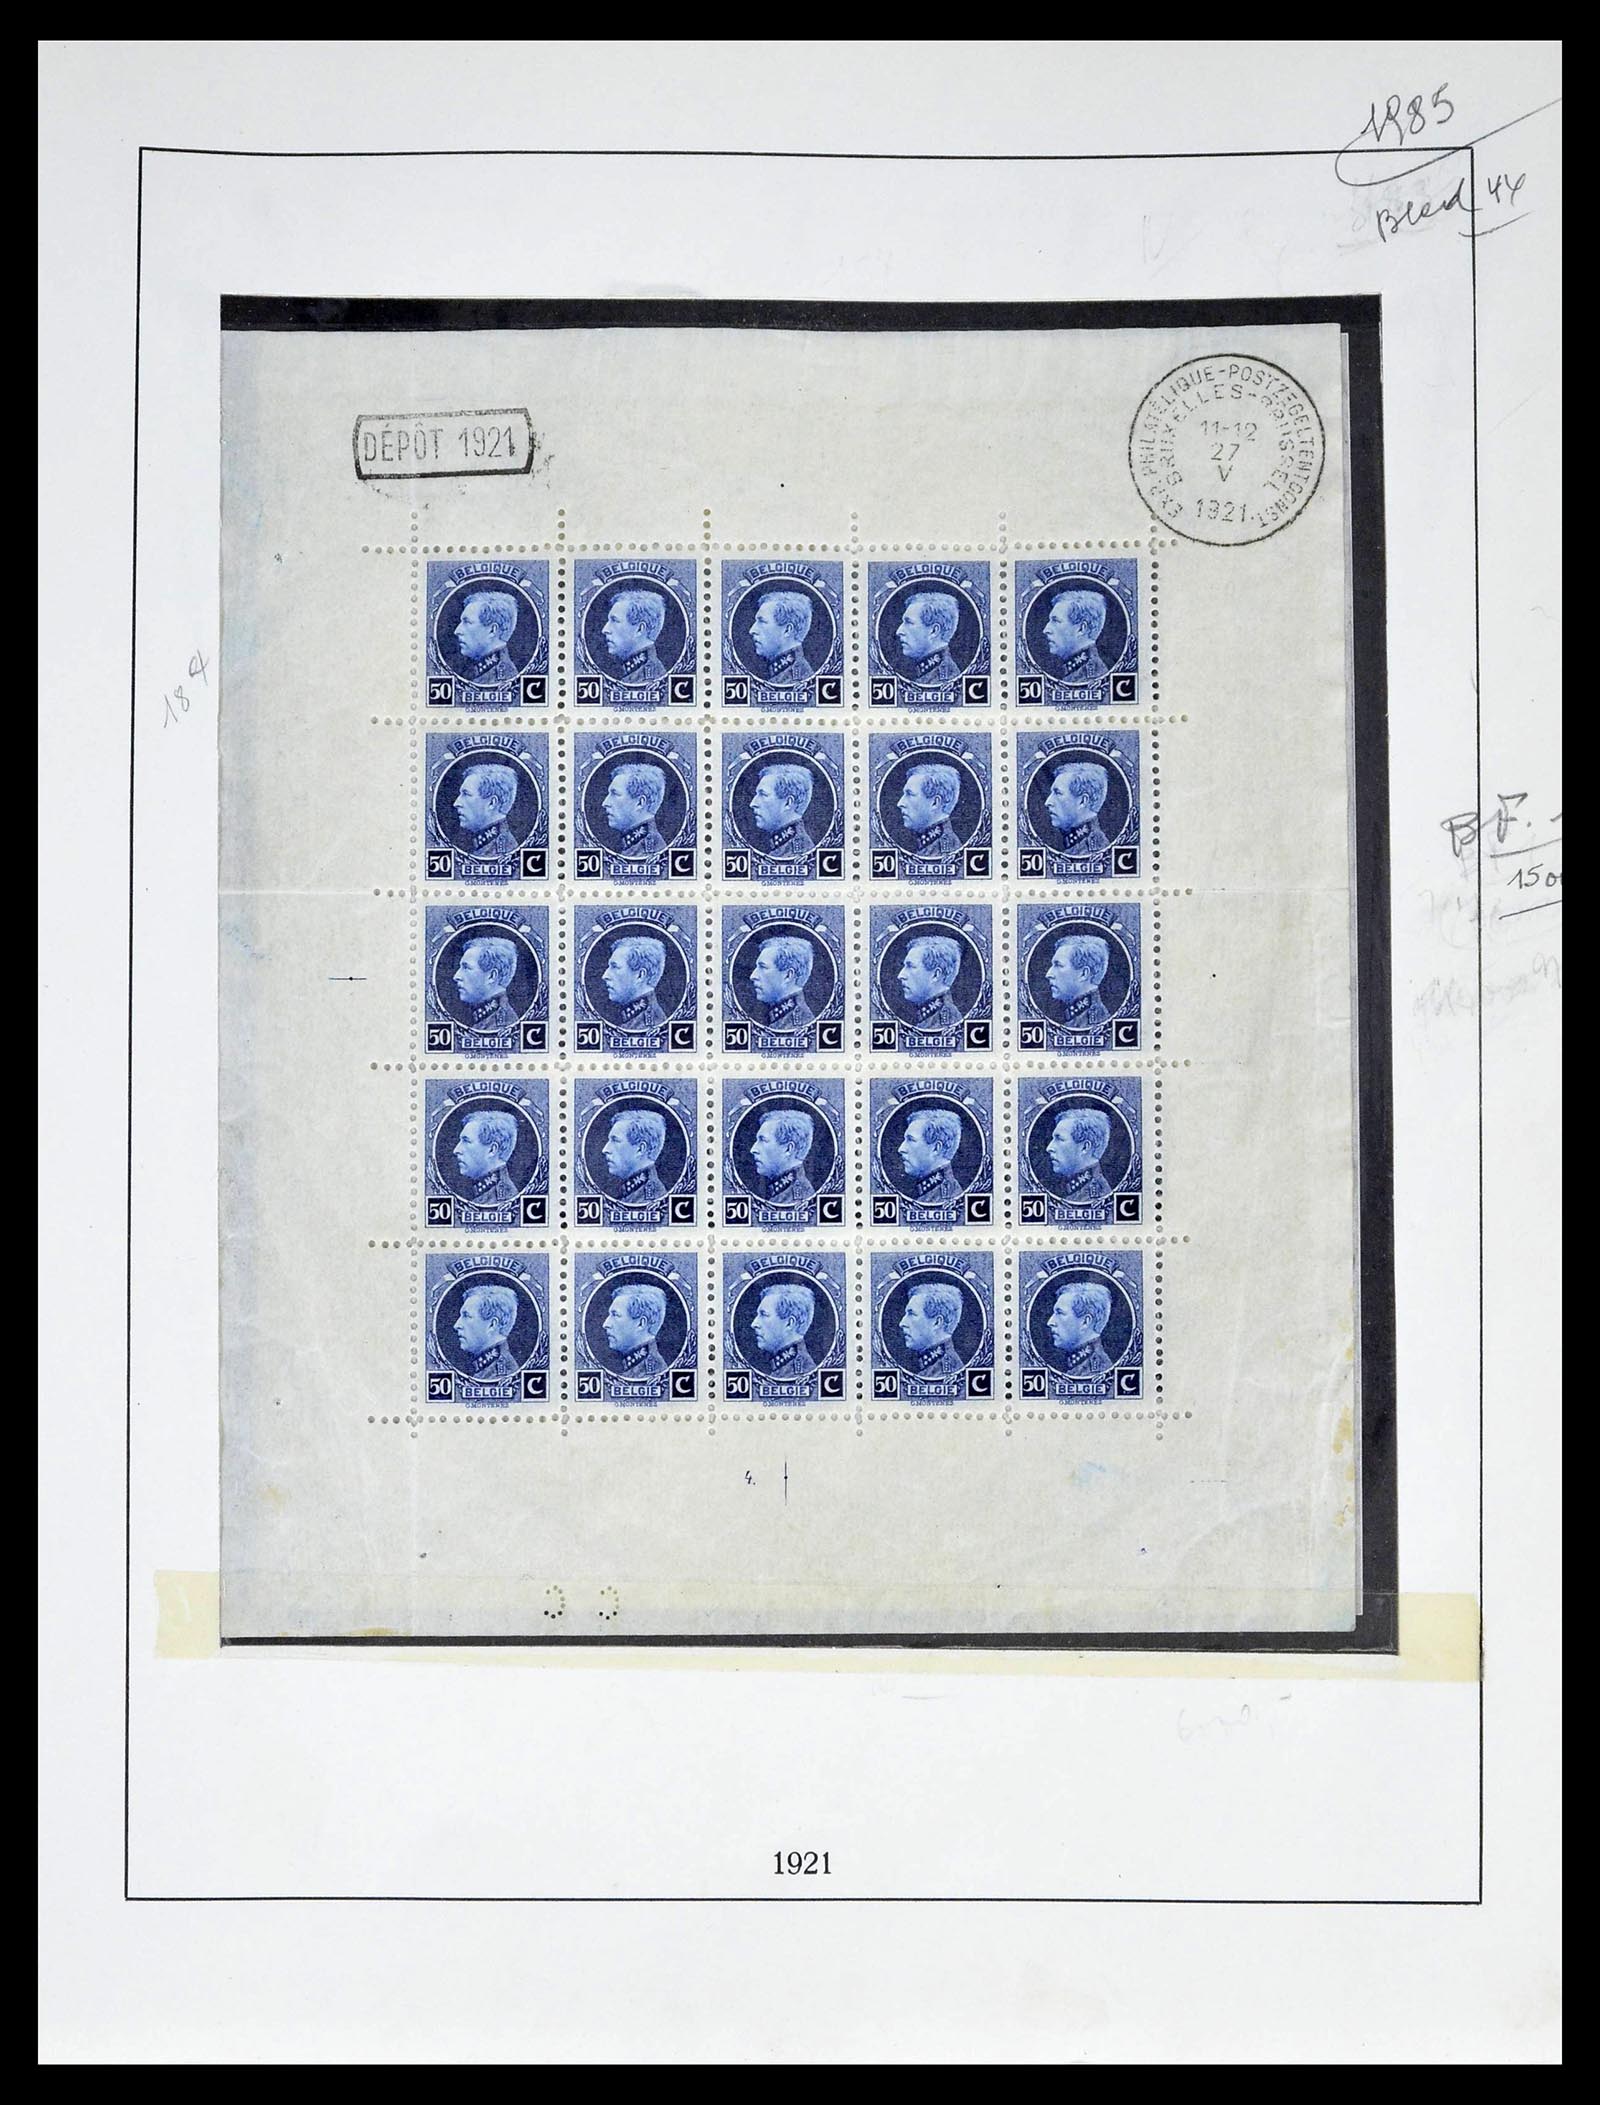 39265 0027 - Stamp collection 39265 Belgium 1849-1962.